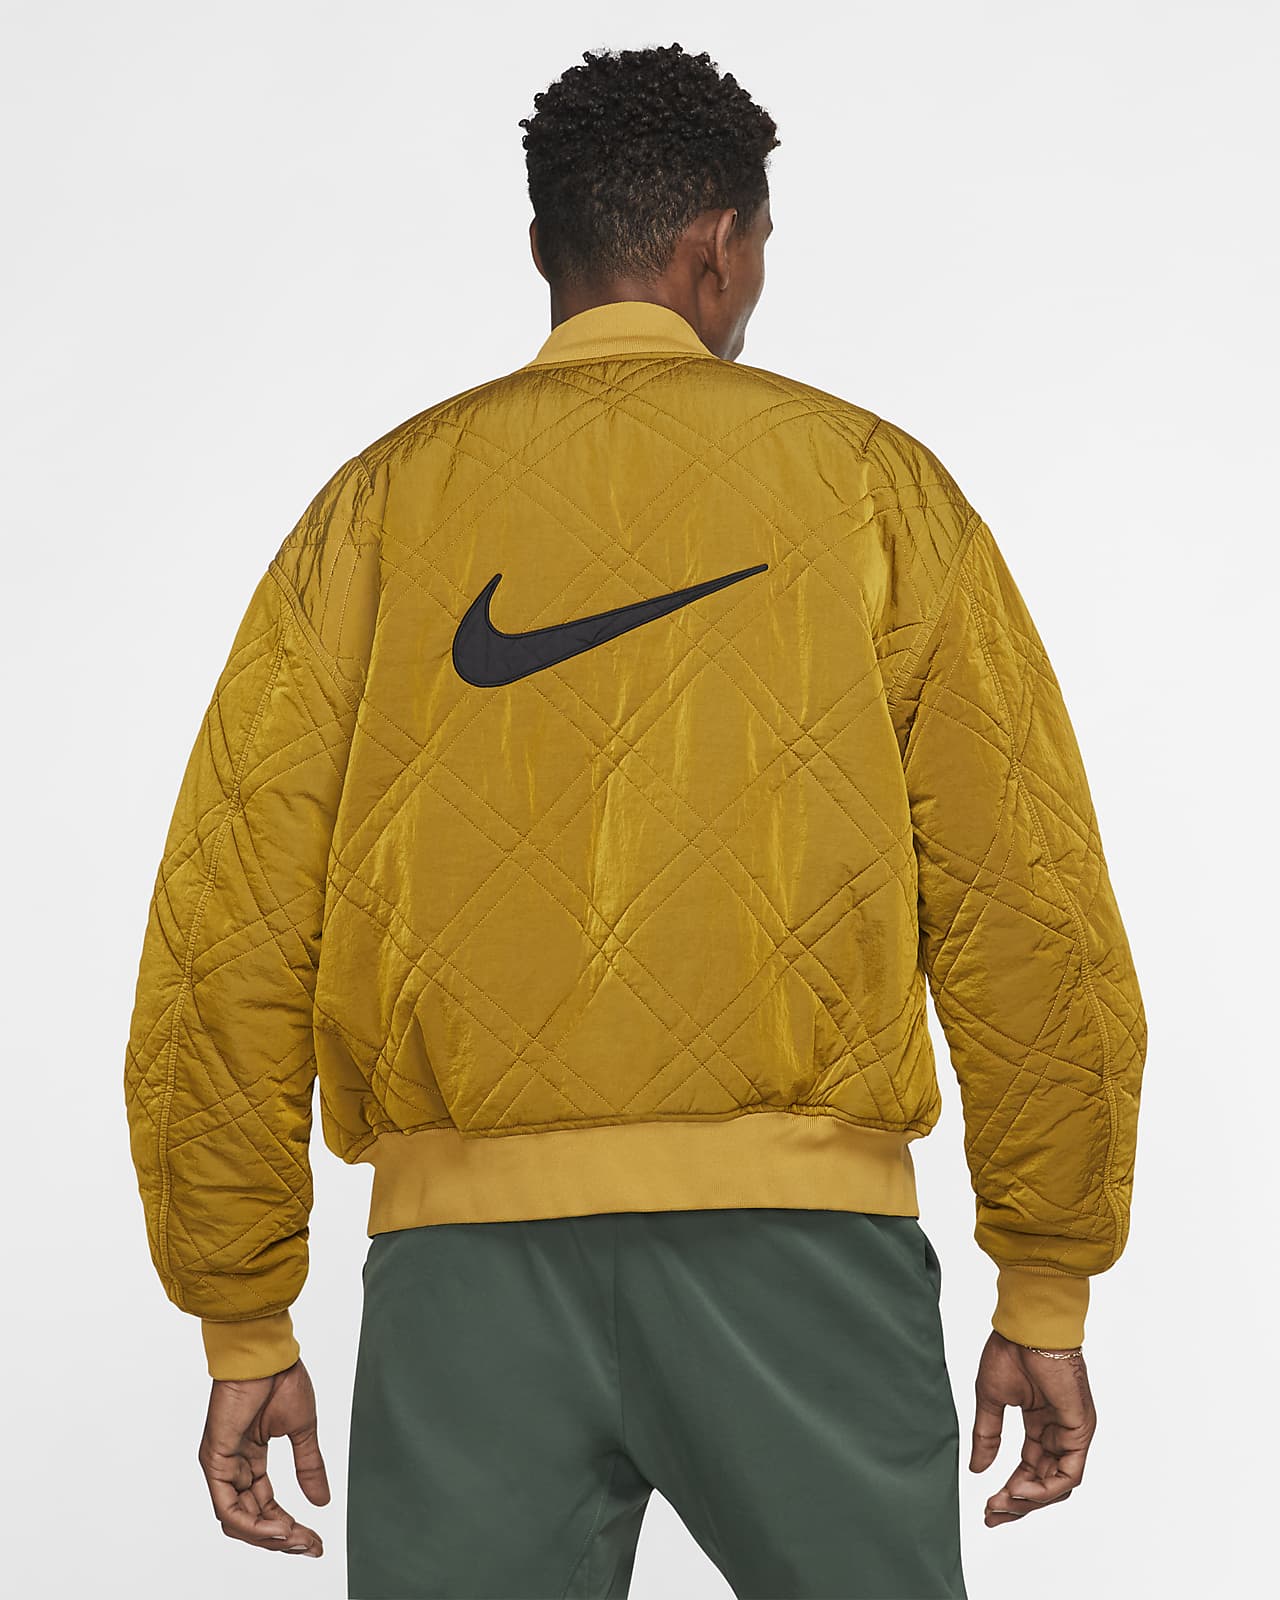 Nogen som helst Sømand Farvel Nike Classic x Sport Men's Reversible Jacket. Nike JP